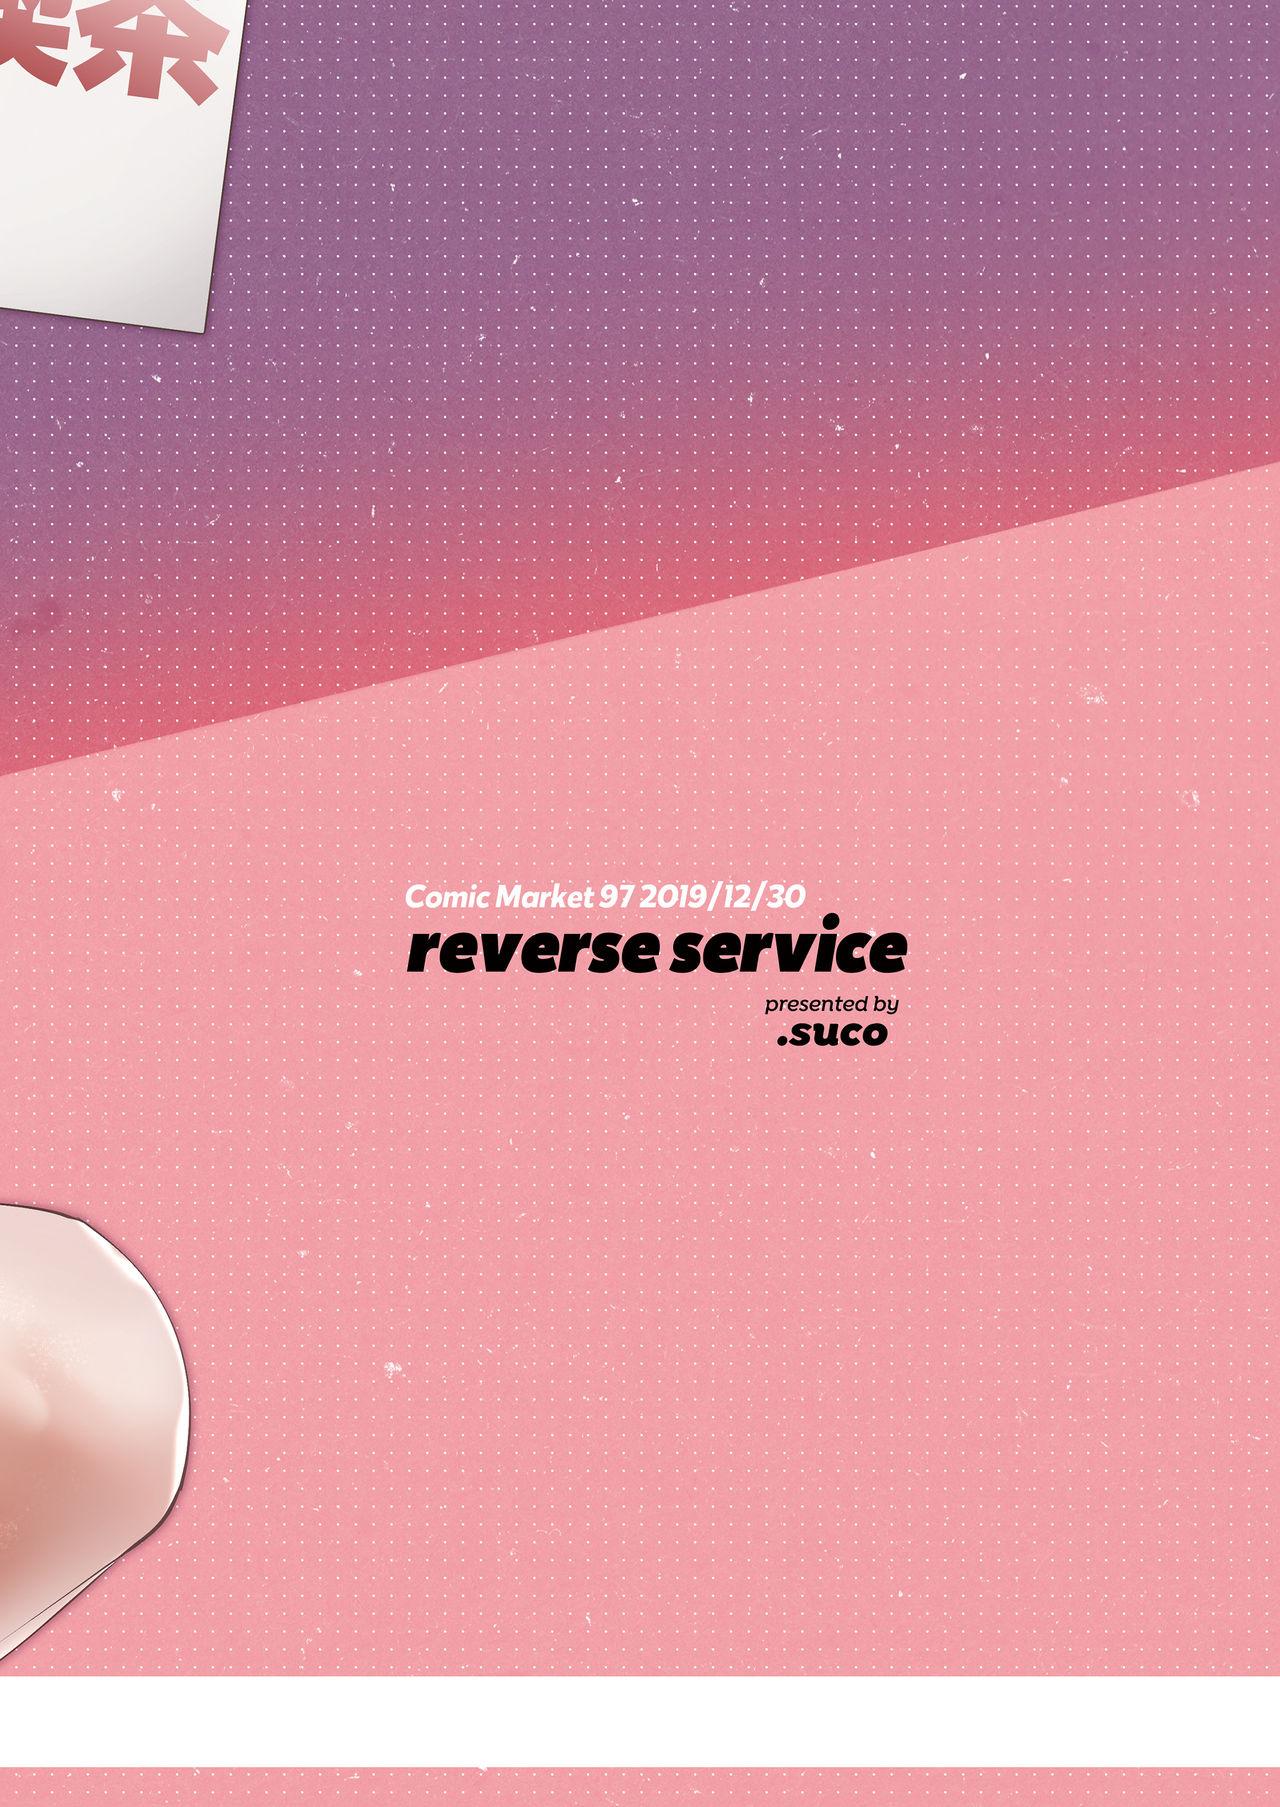 [.suco (dotsuco) reverse service [Digital] 23